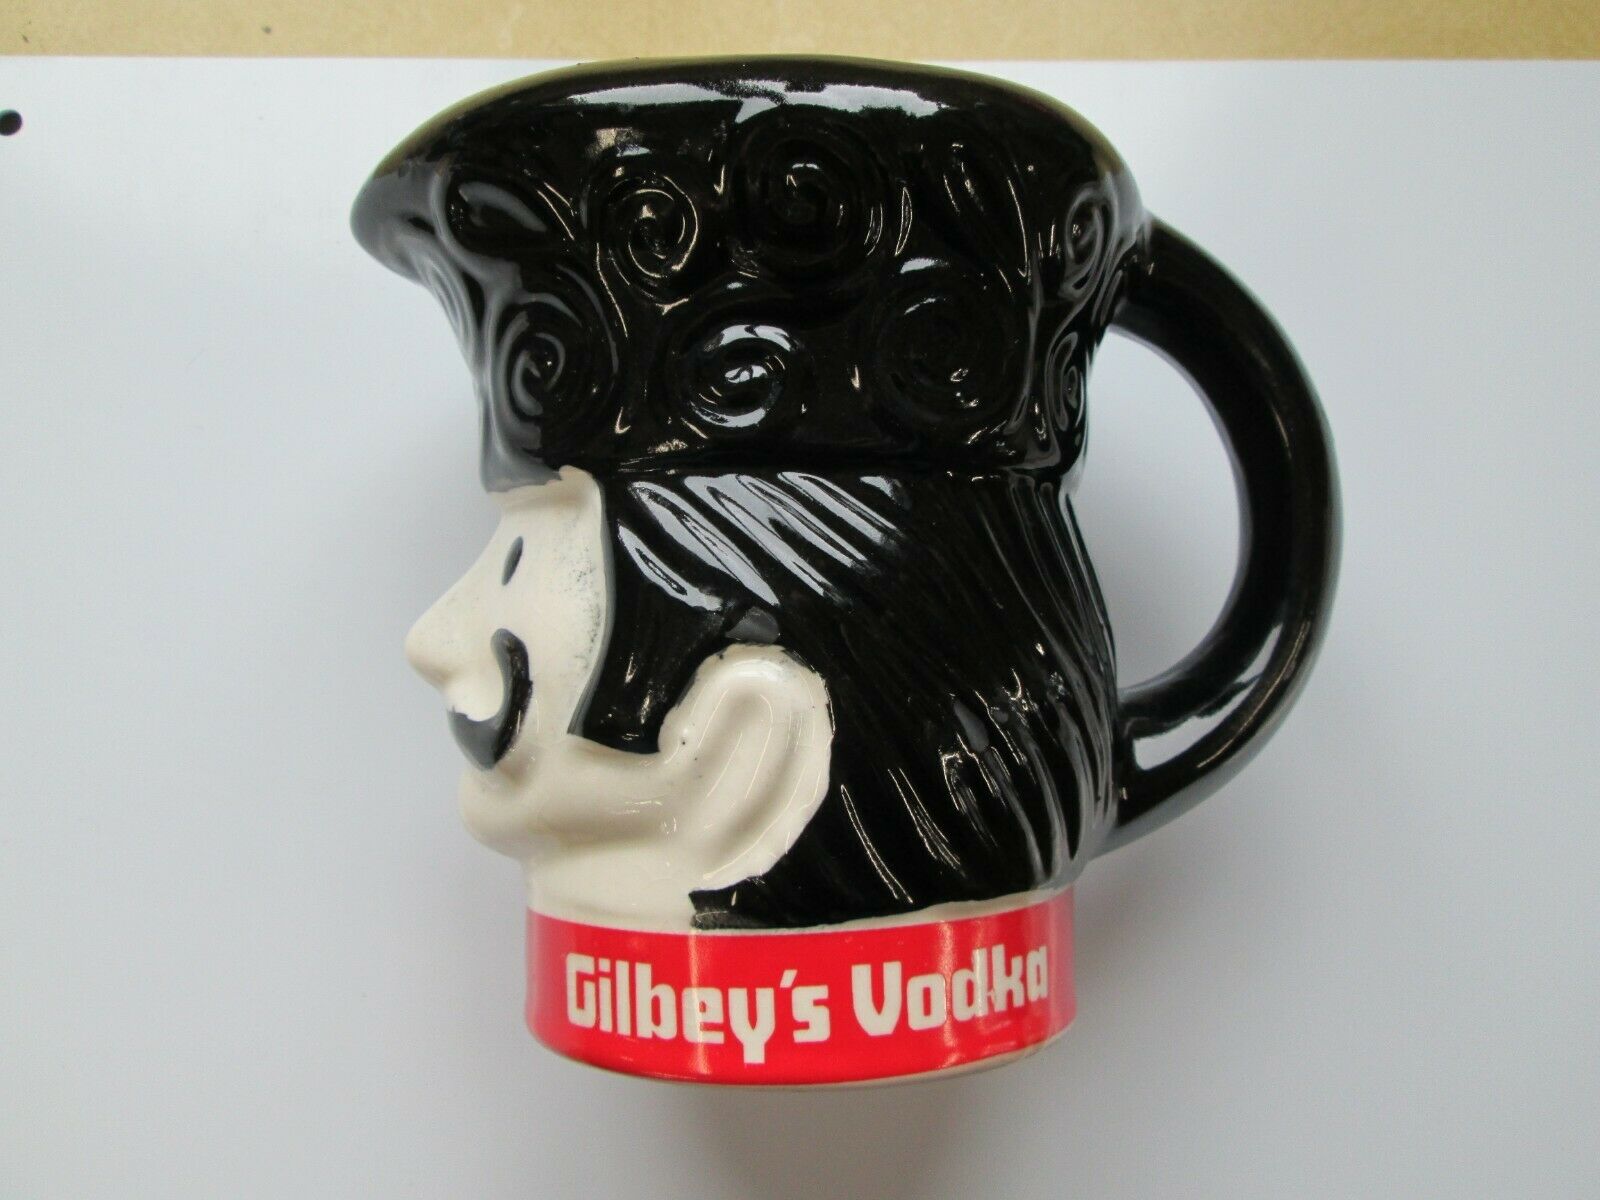 Vintage W. & A. Gilbey's Vodka Pub Pitcher Head Barware Jug Black, Red, White